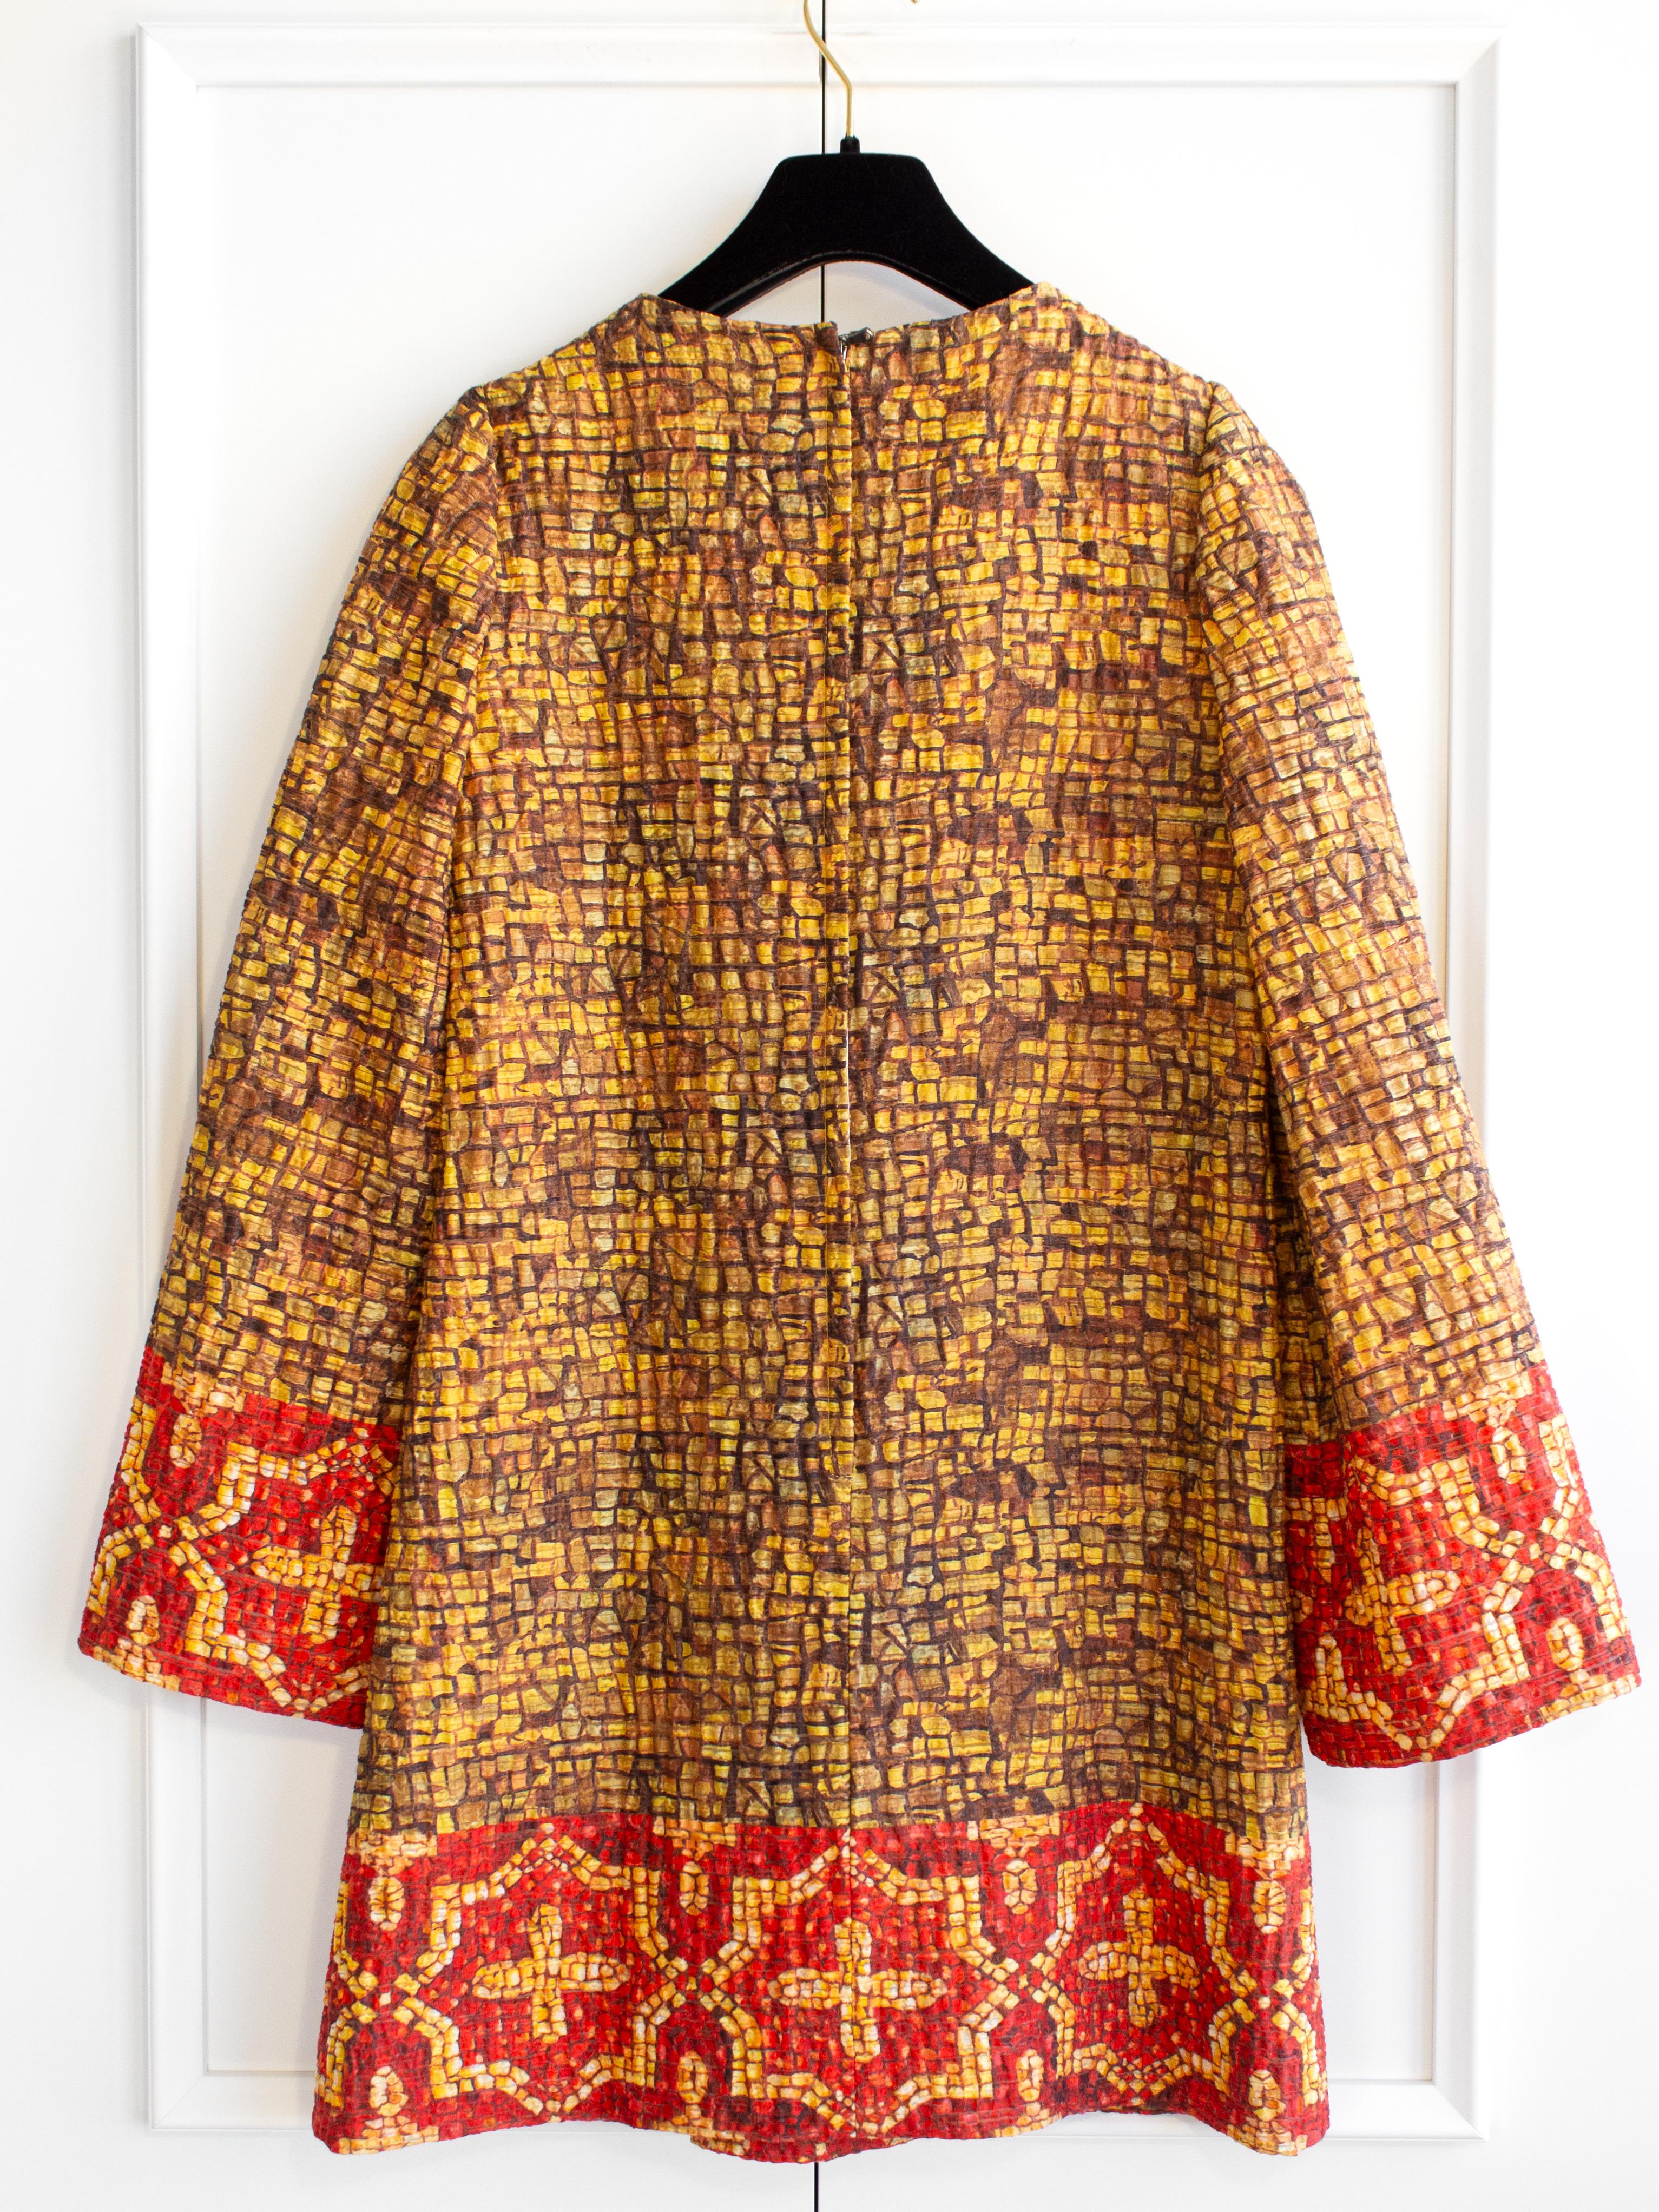 Dolce&Gabbana Fall/Winter 2013 Byzantine Runway Mosaic Gold Red Cross Dress For Sale 3